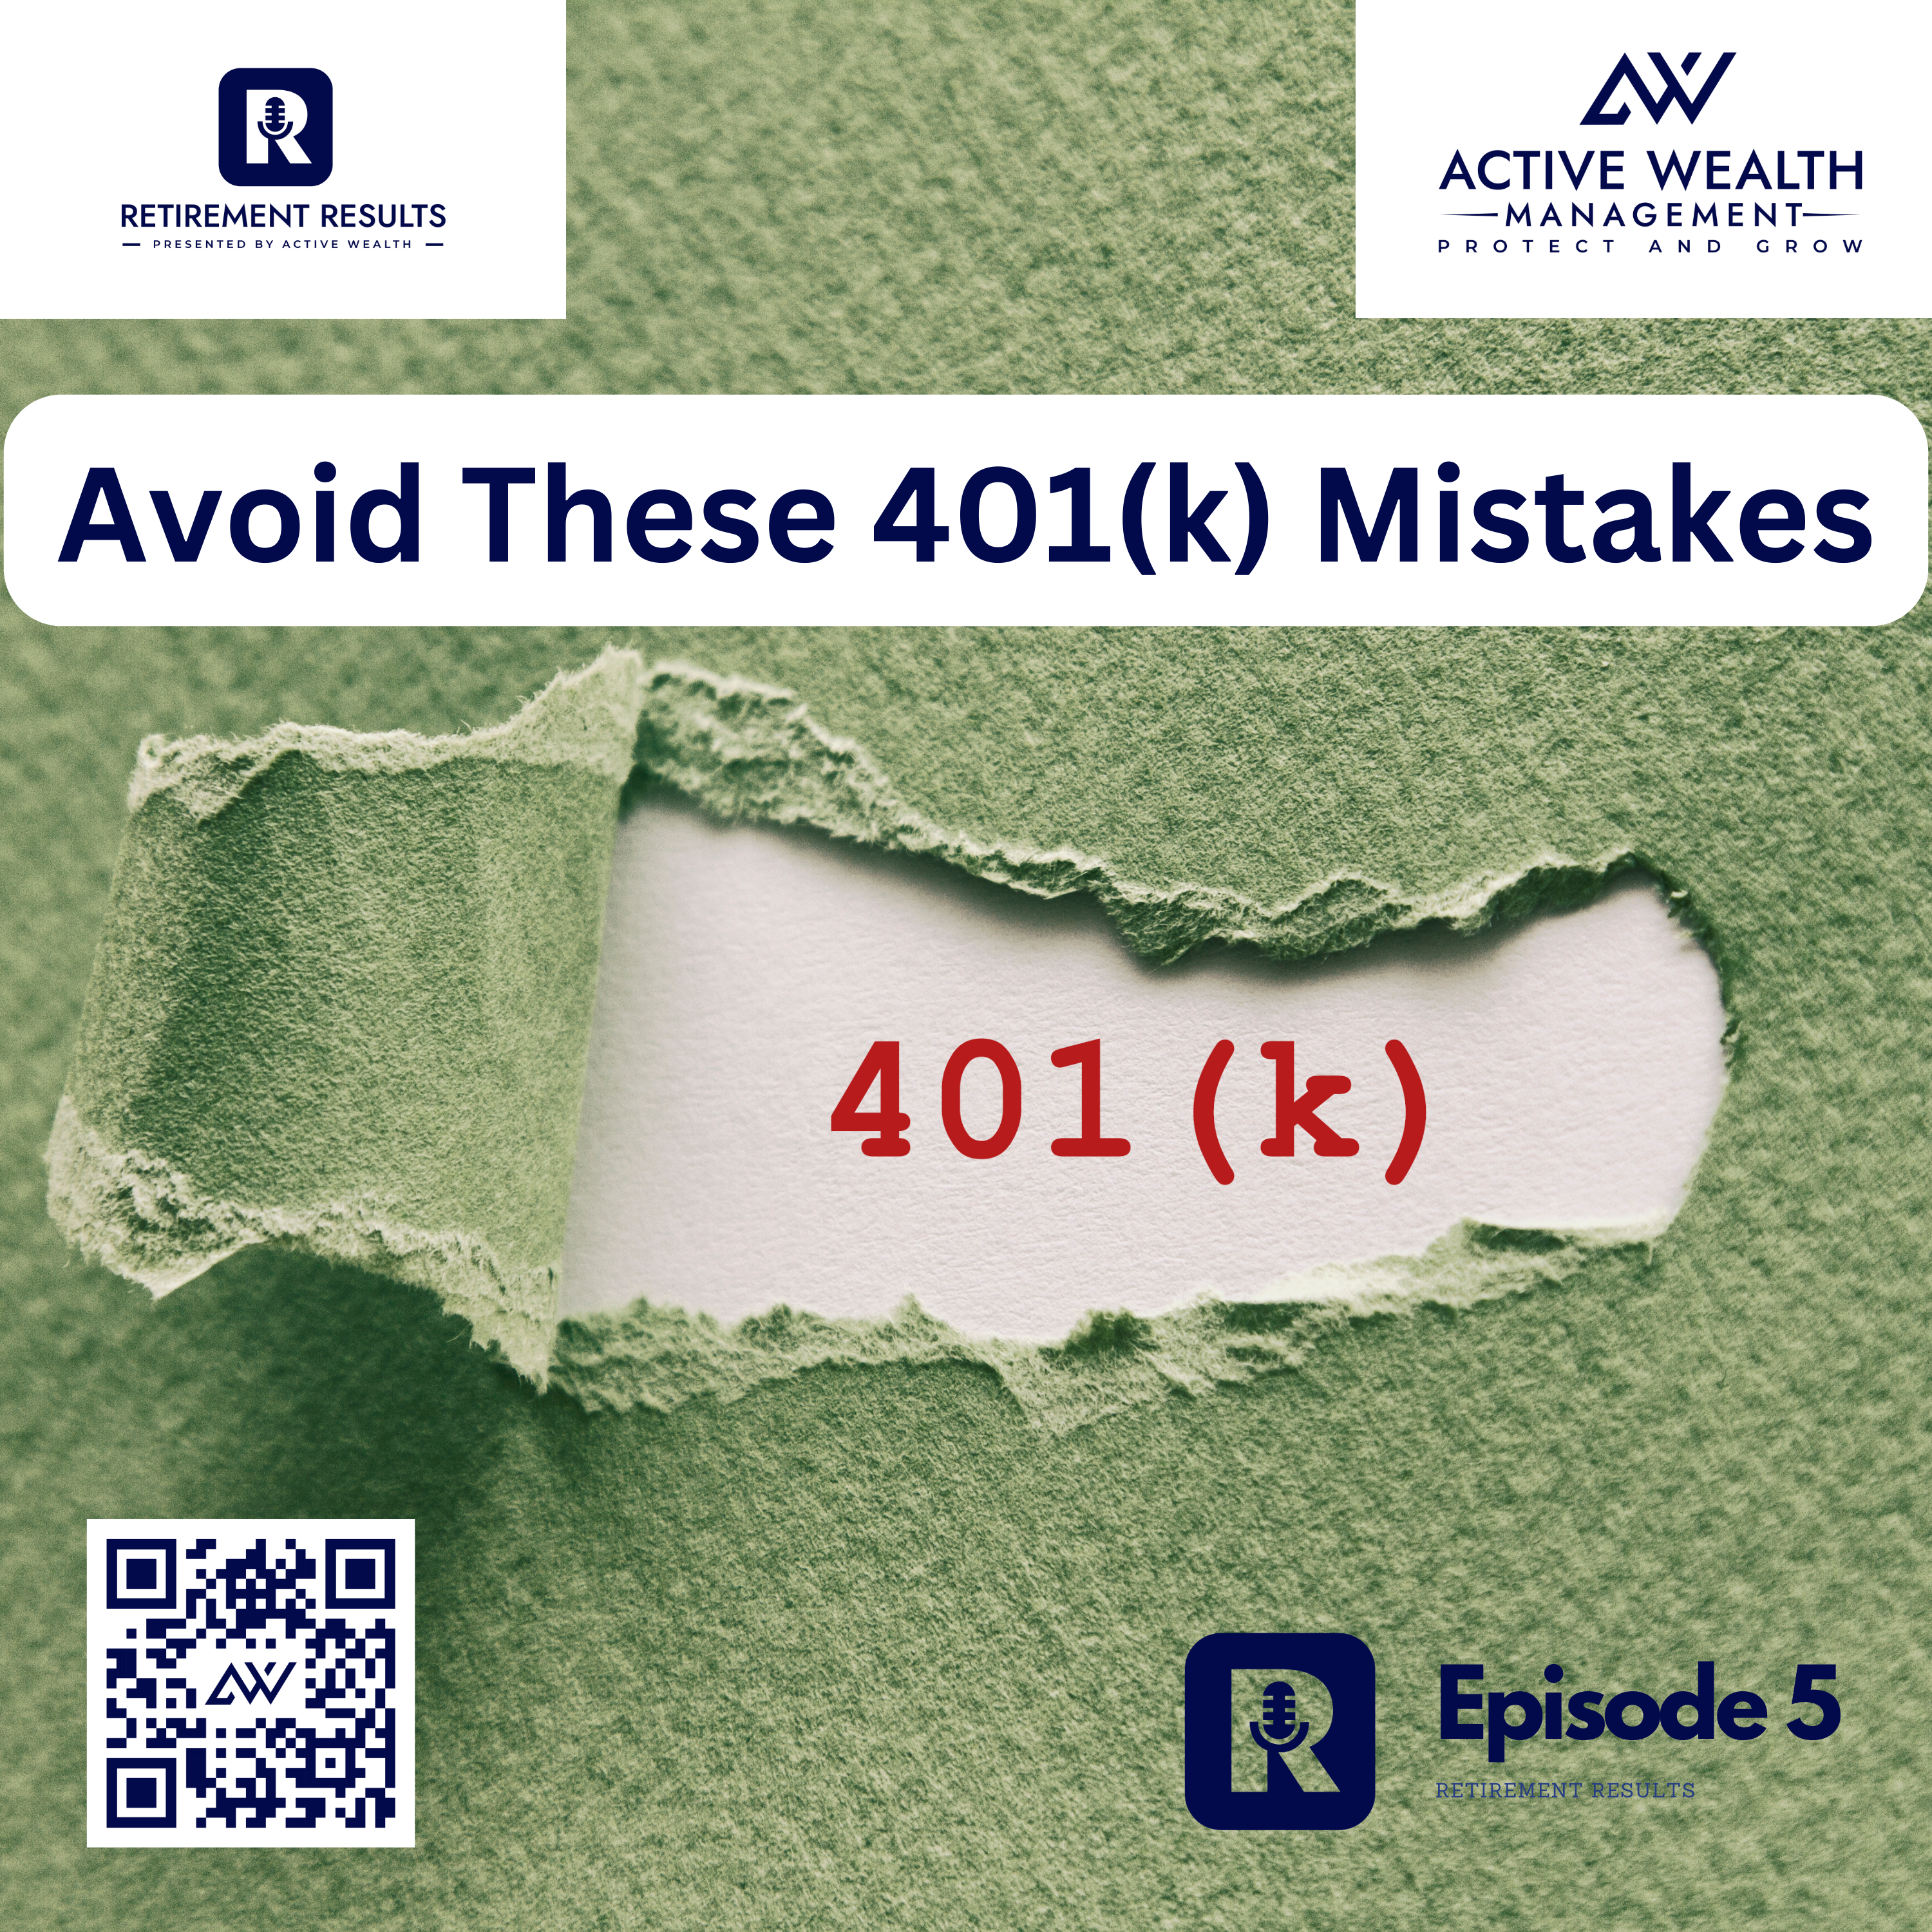 Avoid These Common 401(k) Mistakes!